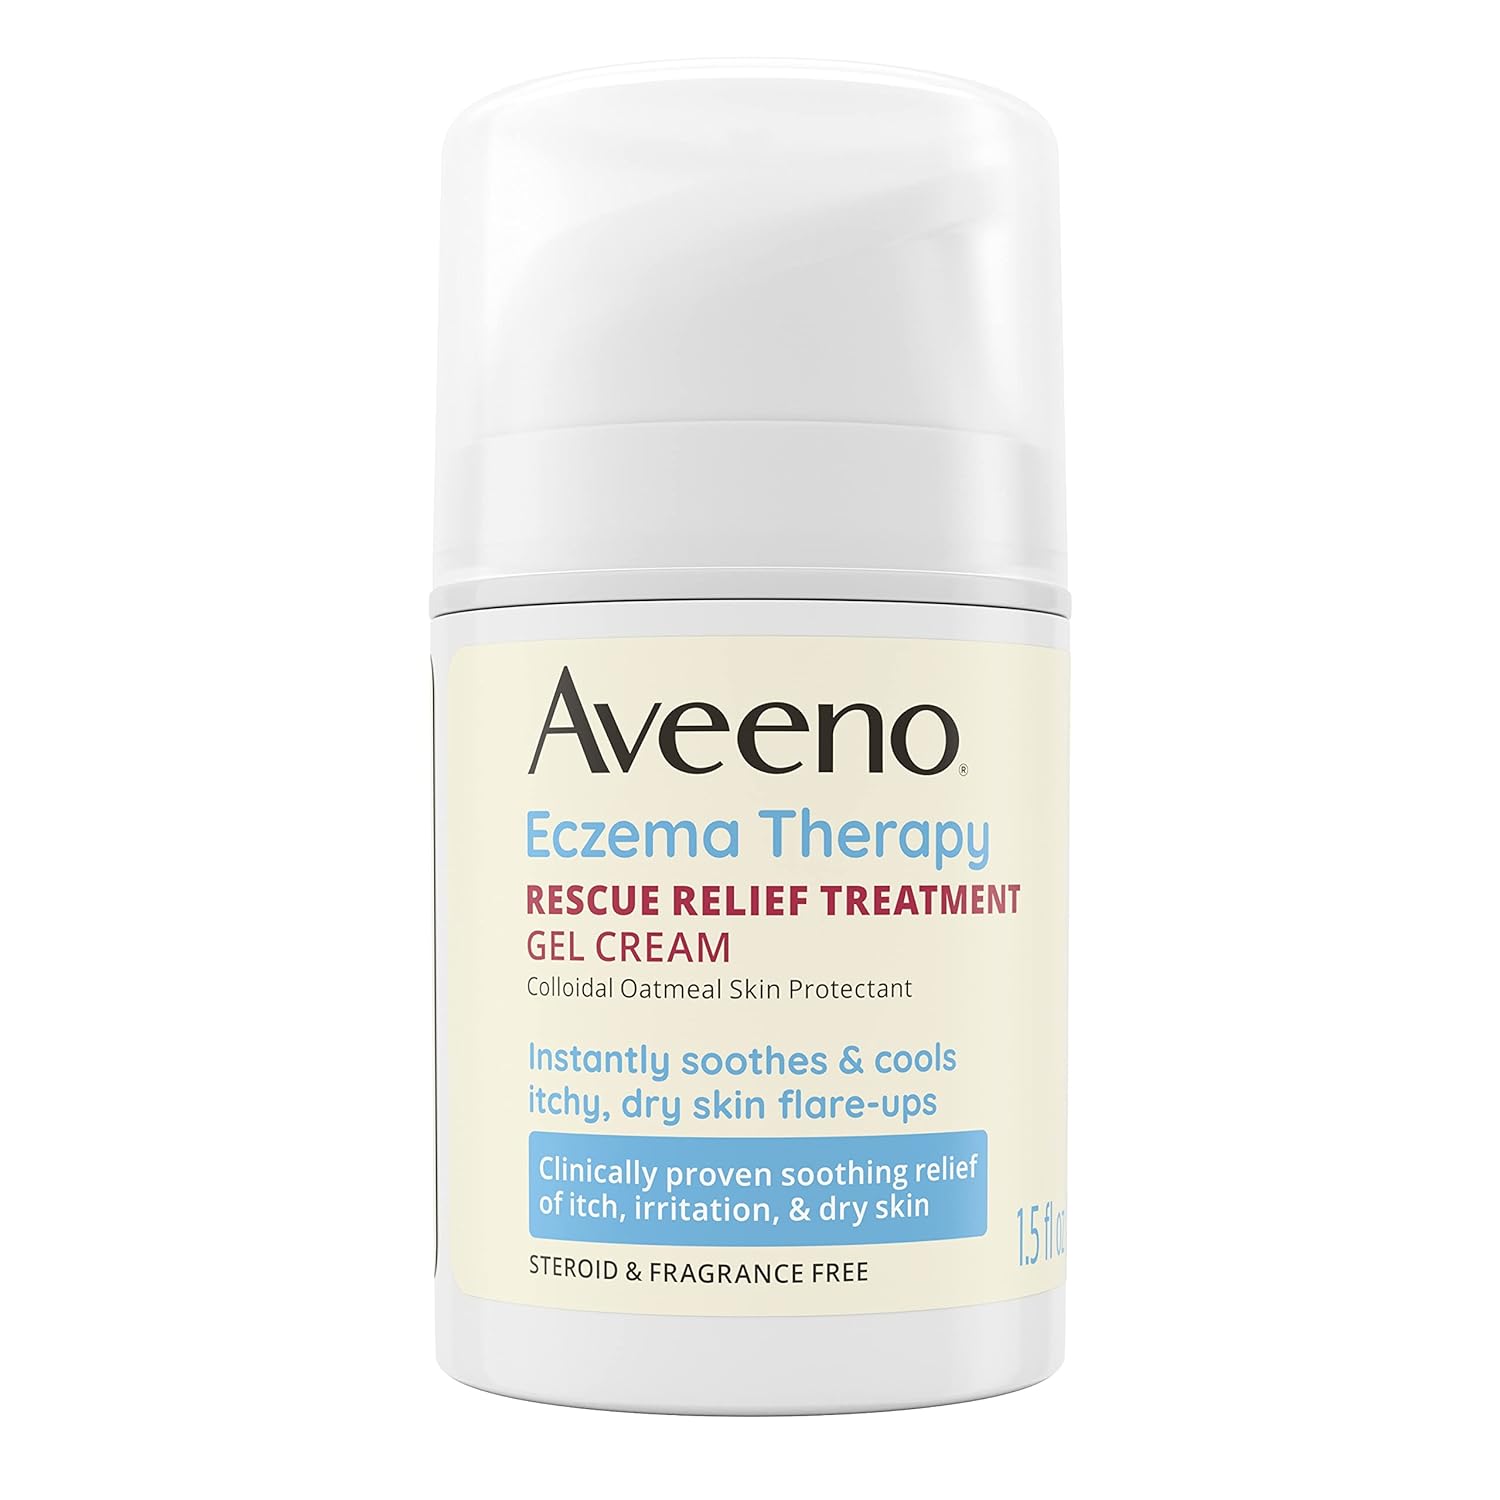 Aveeno Eczema Therapy Rescue Relief Treatment Gel Cream with Colloidal